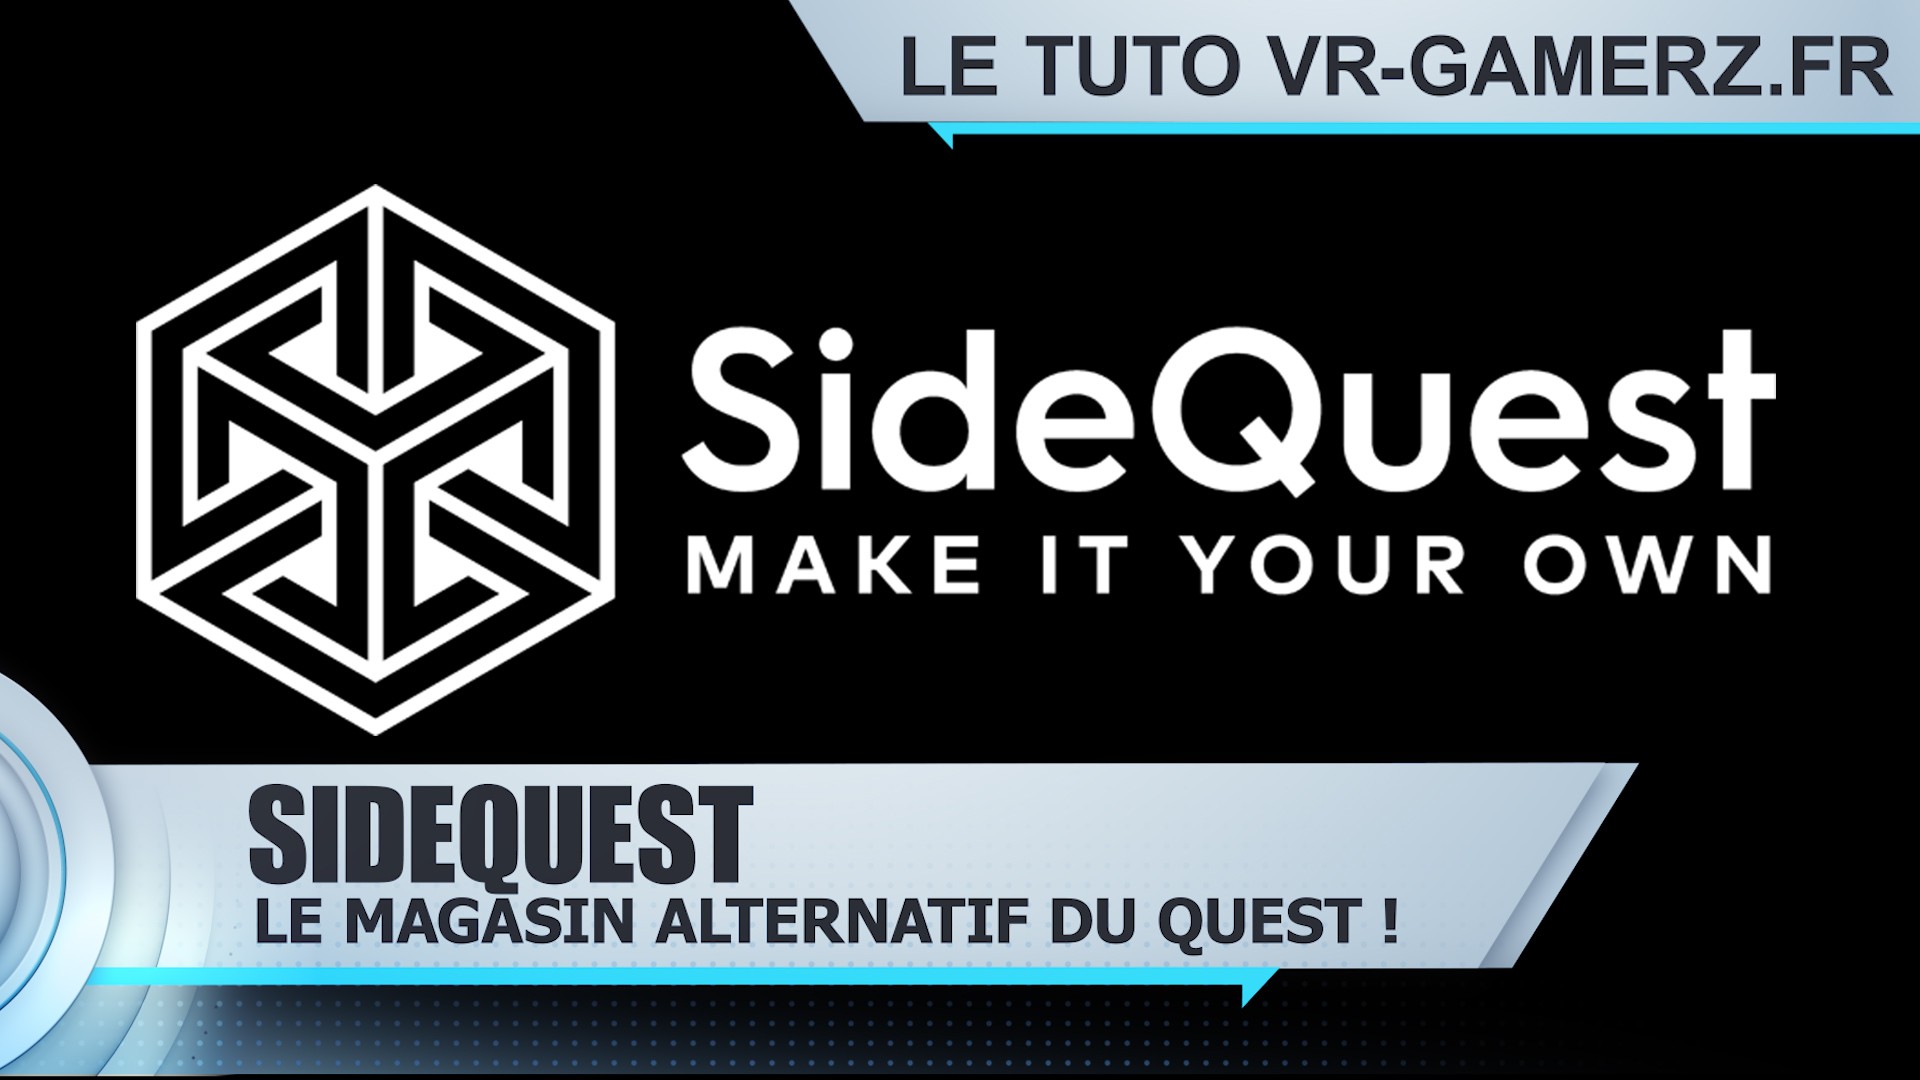 Tuto Sidequest Oculus quest 2 : le magasin alternatif de l’Oculus quest !